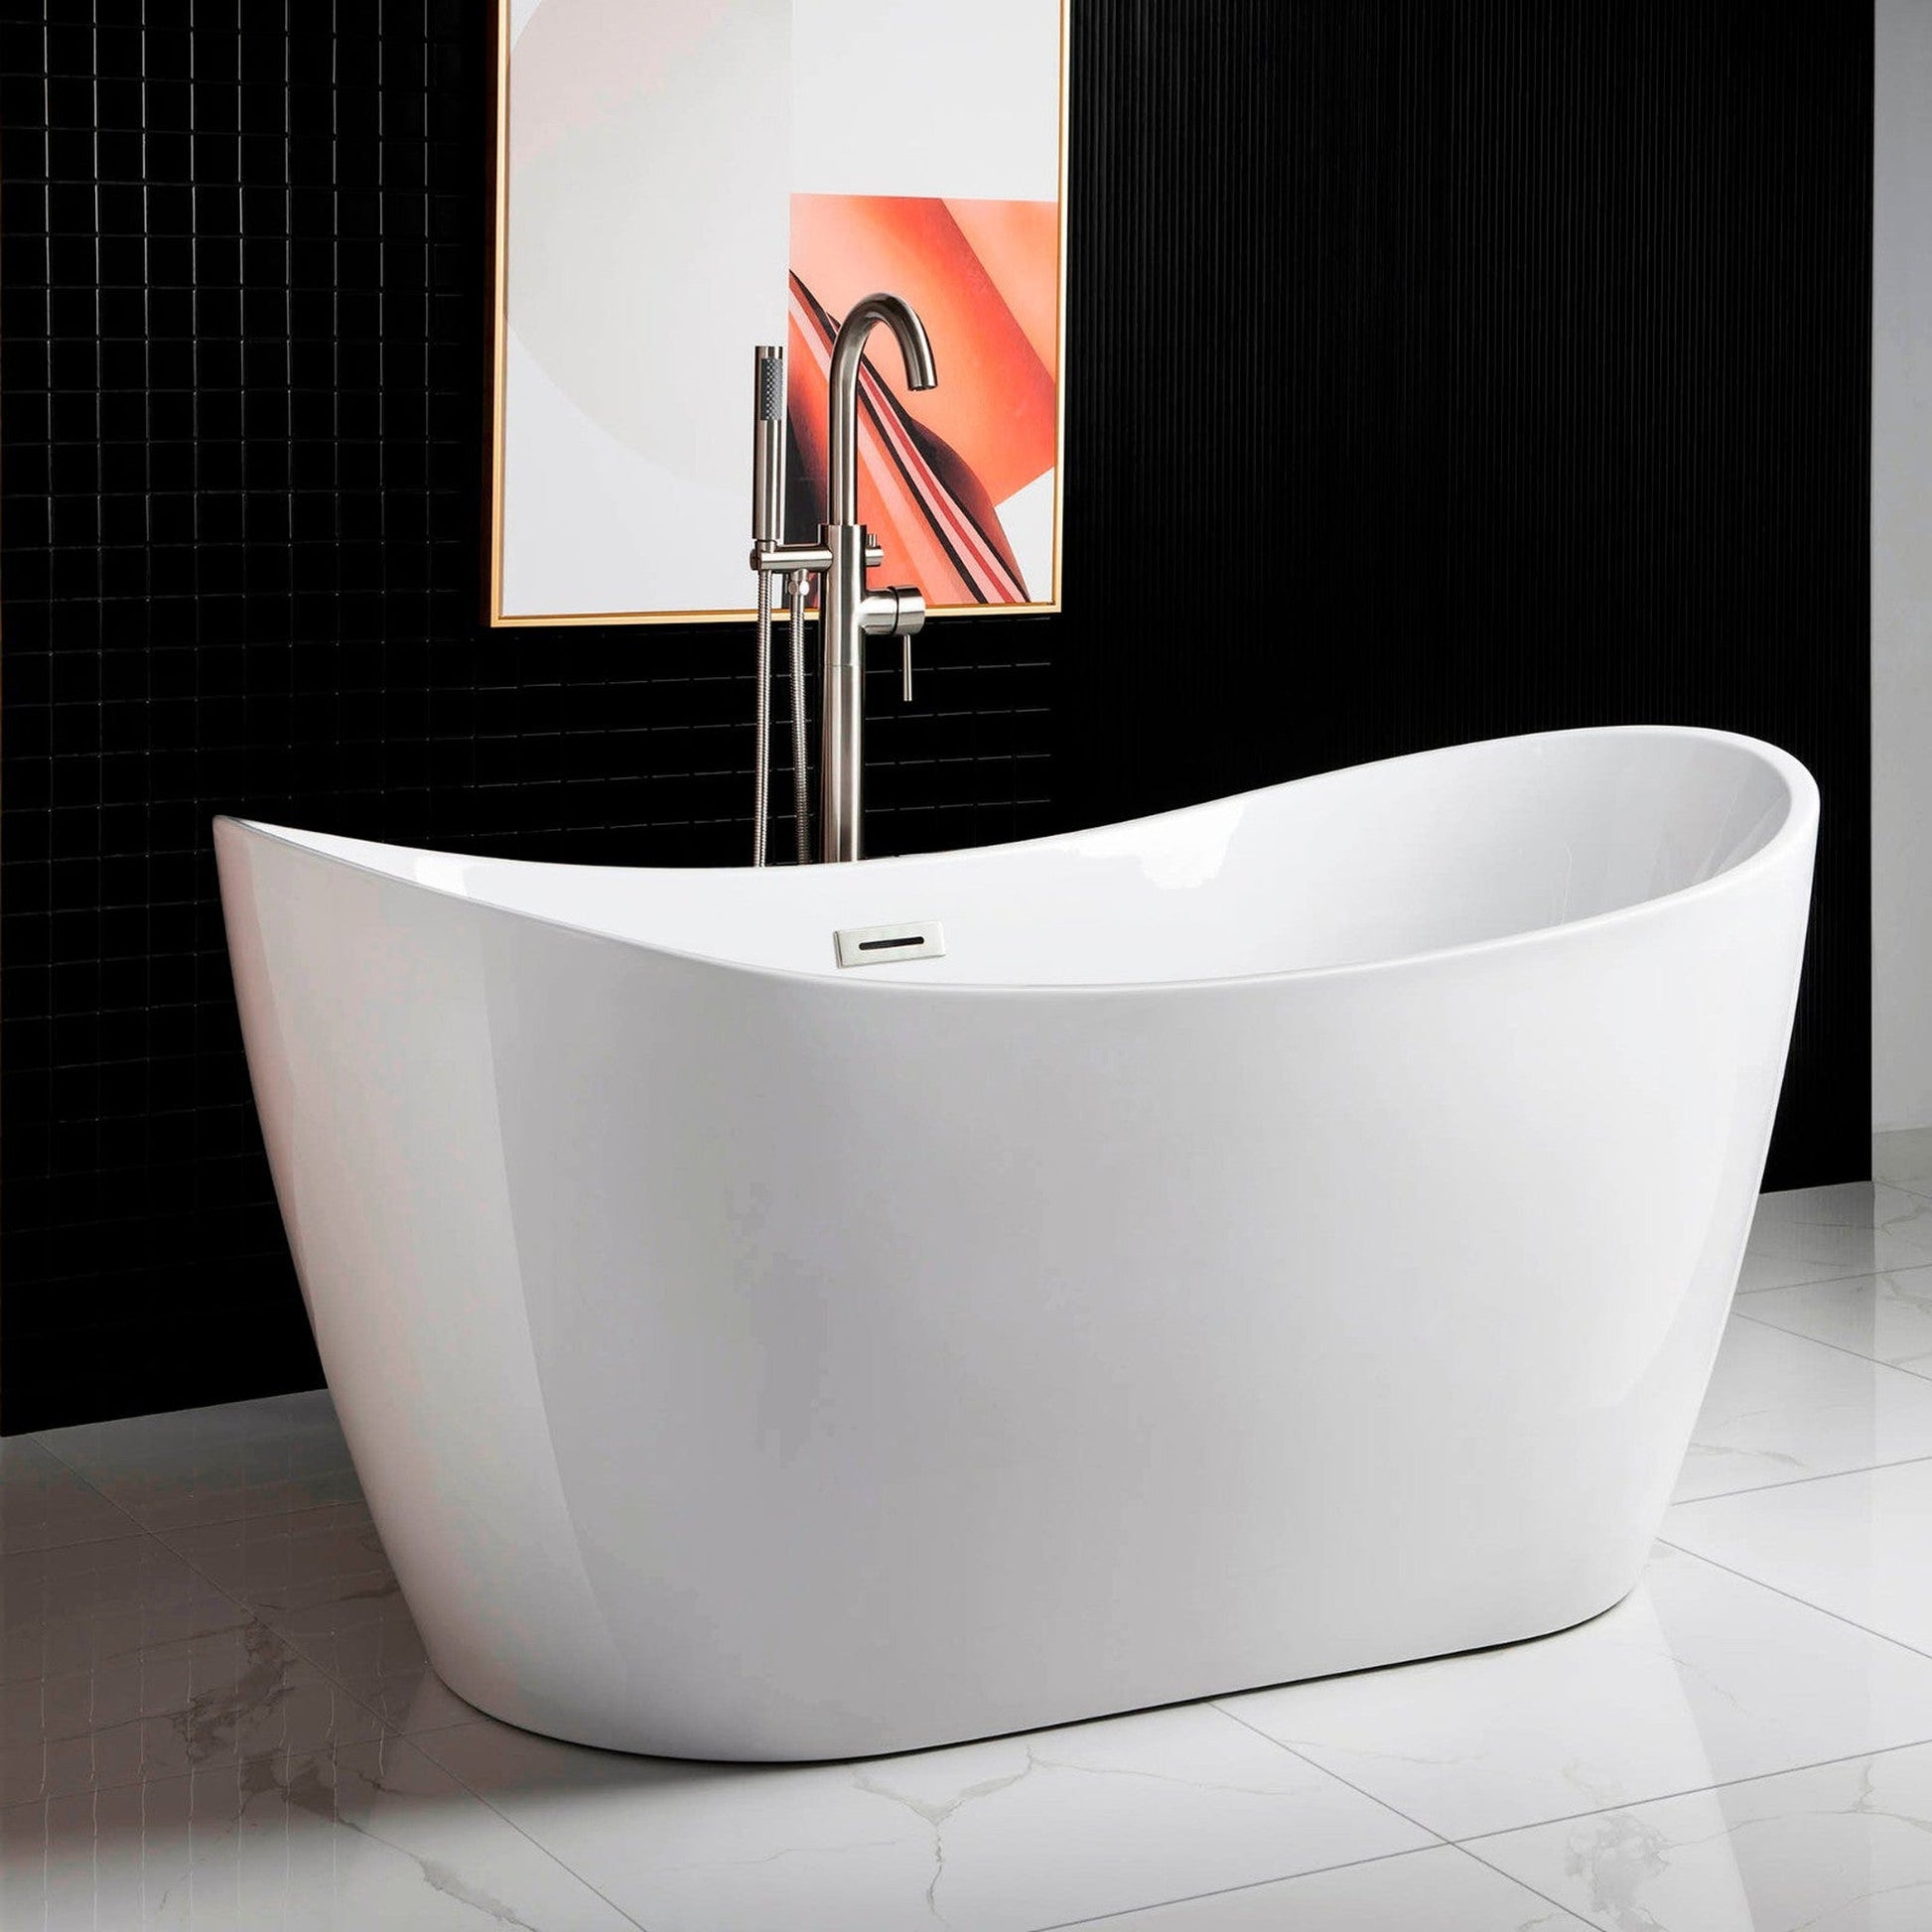 WoodBridge B0016 59" White Acrylic Freestanding Soaking Bathtub With Chrome Drain, Overflow, F0071CHVT Tub Filler and Caddy Tray